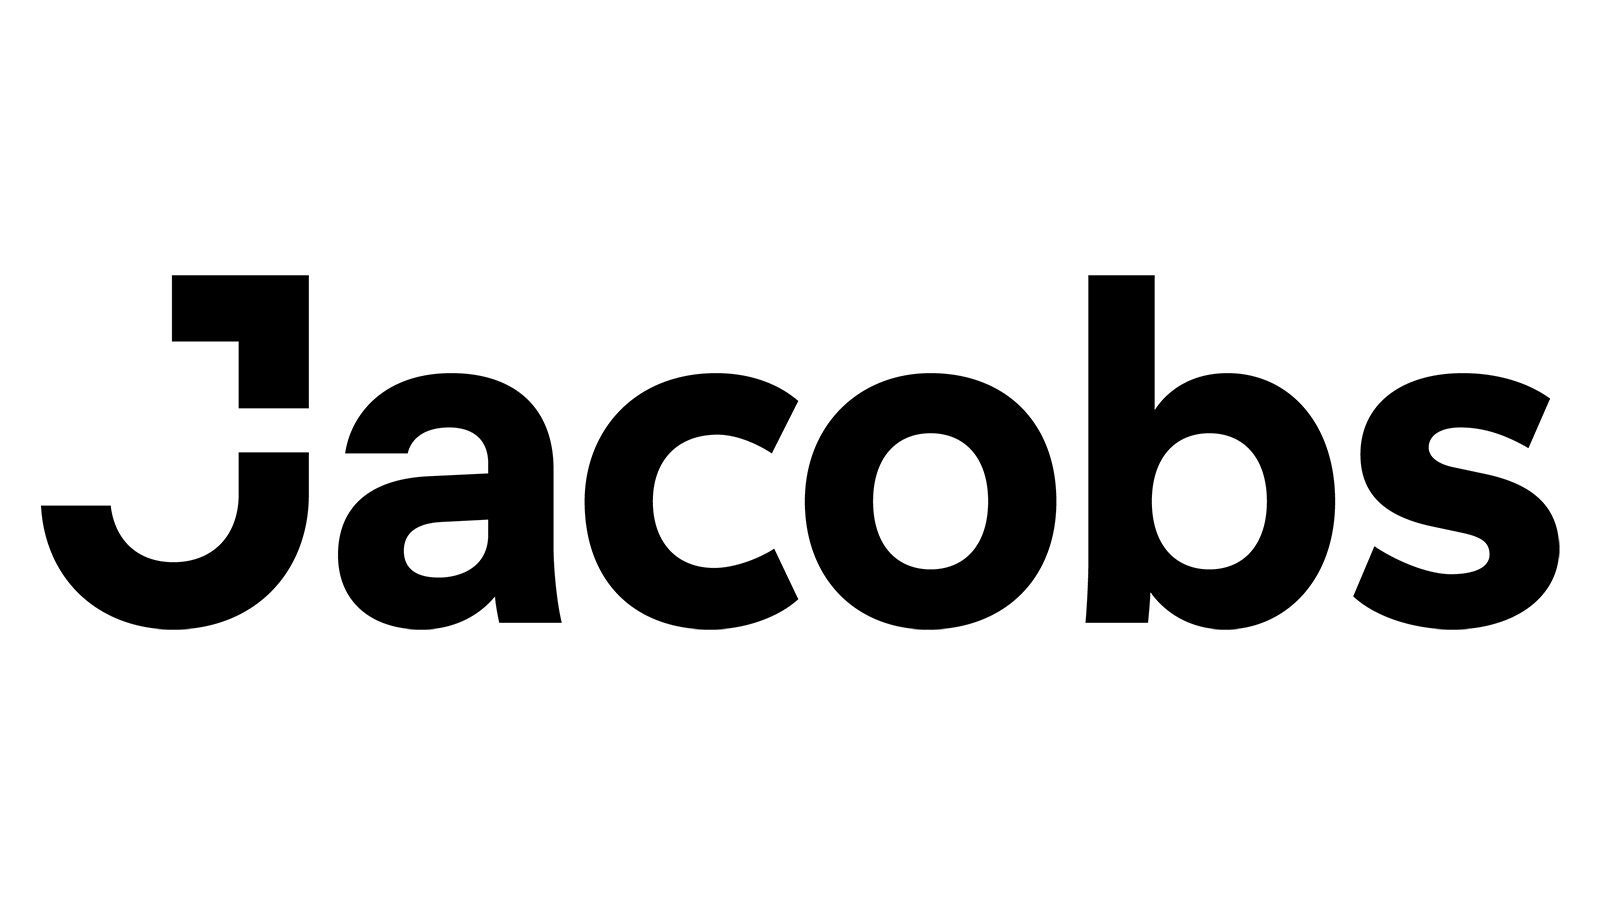 Jacobs Brand Logo